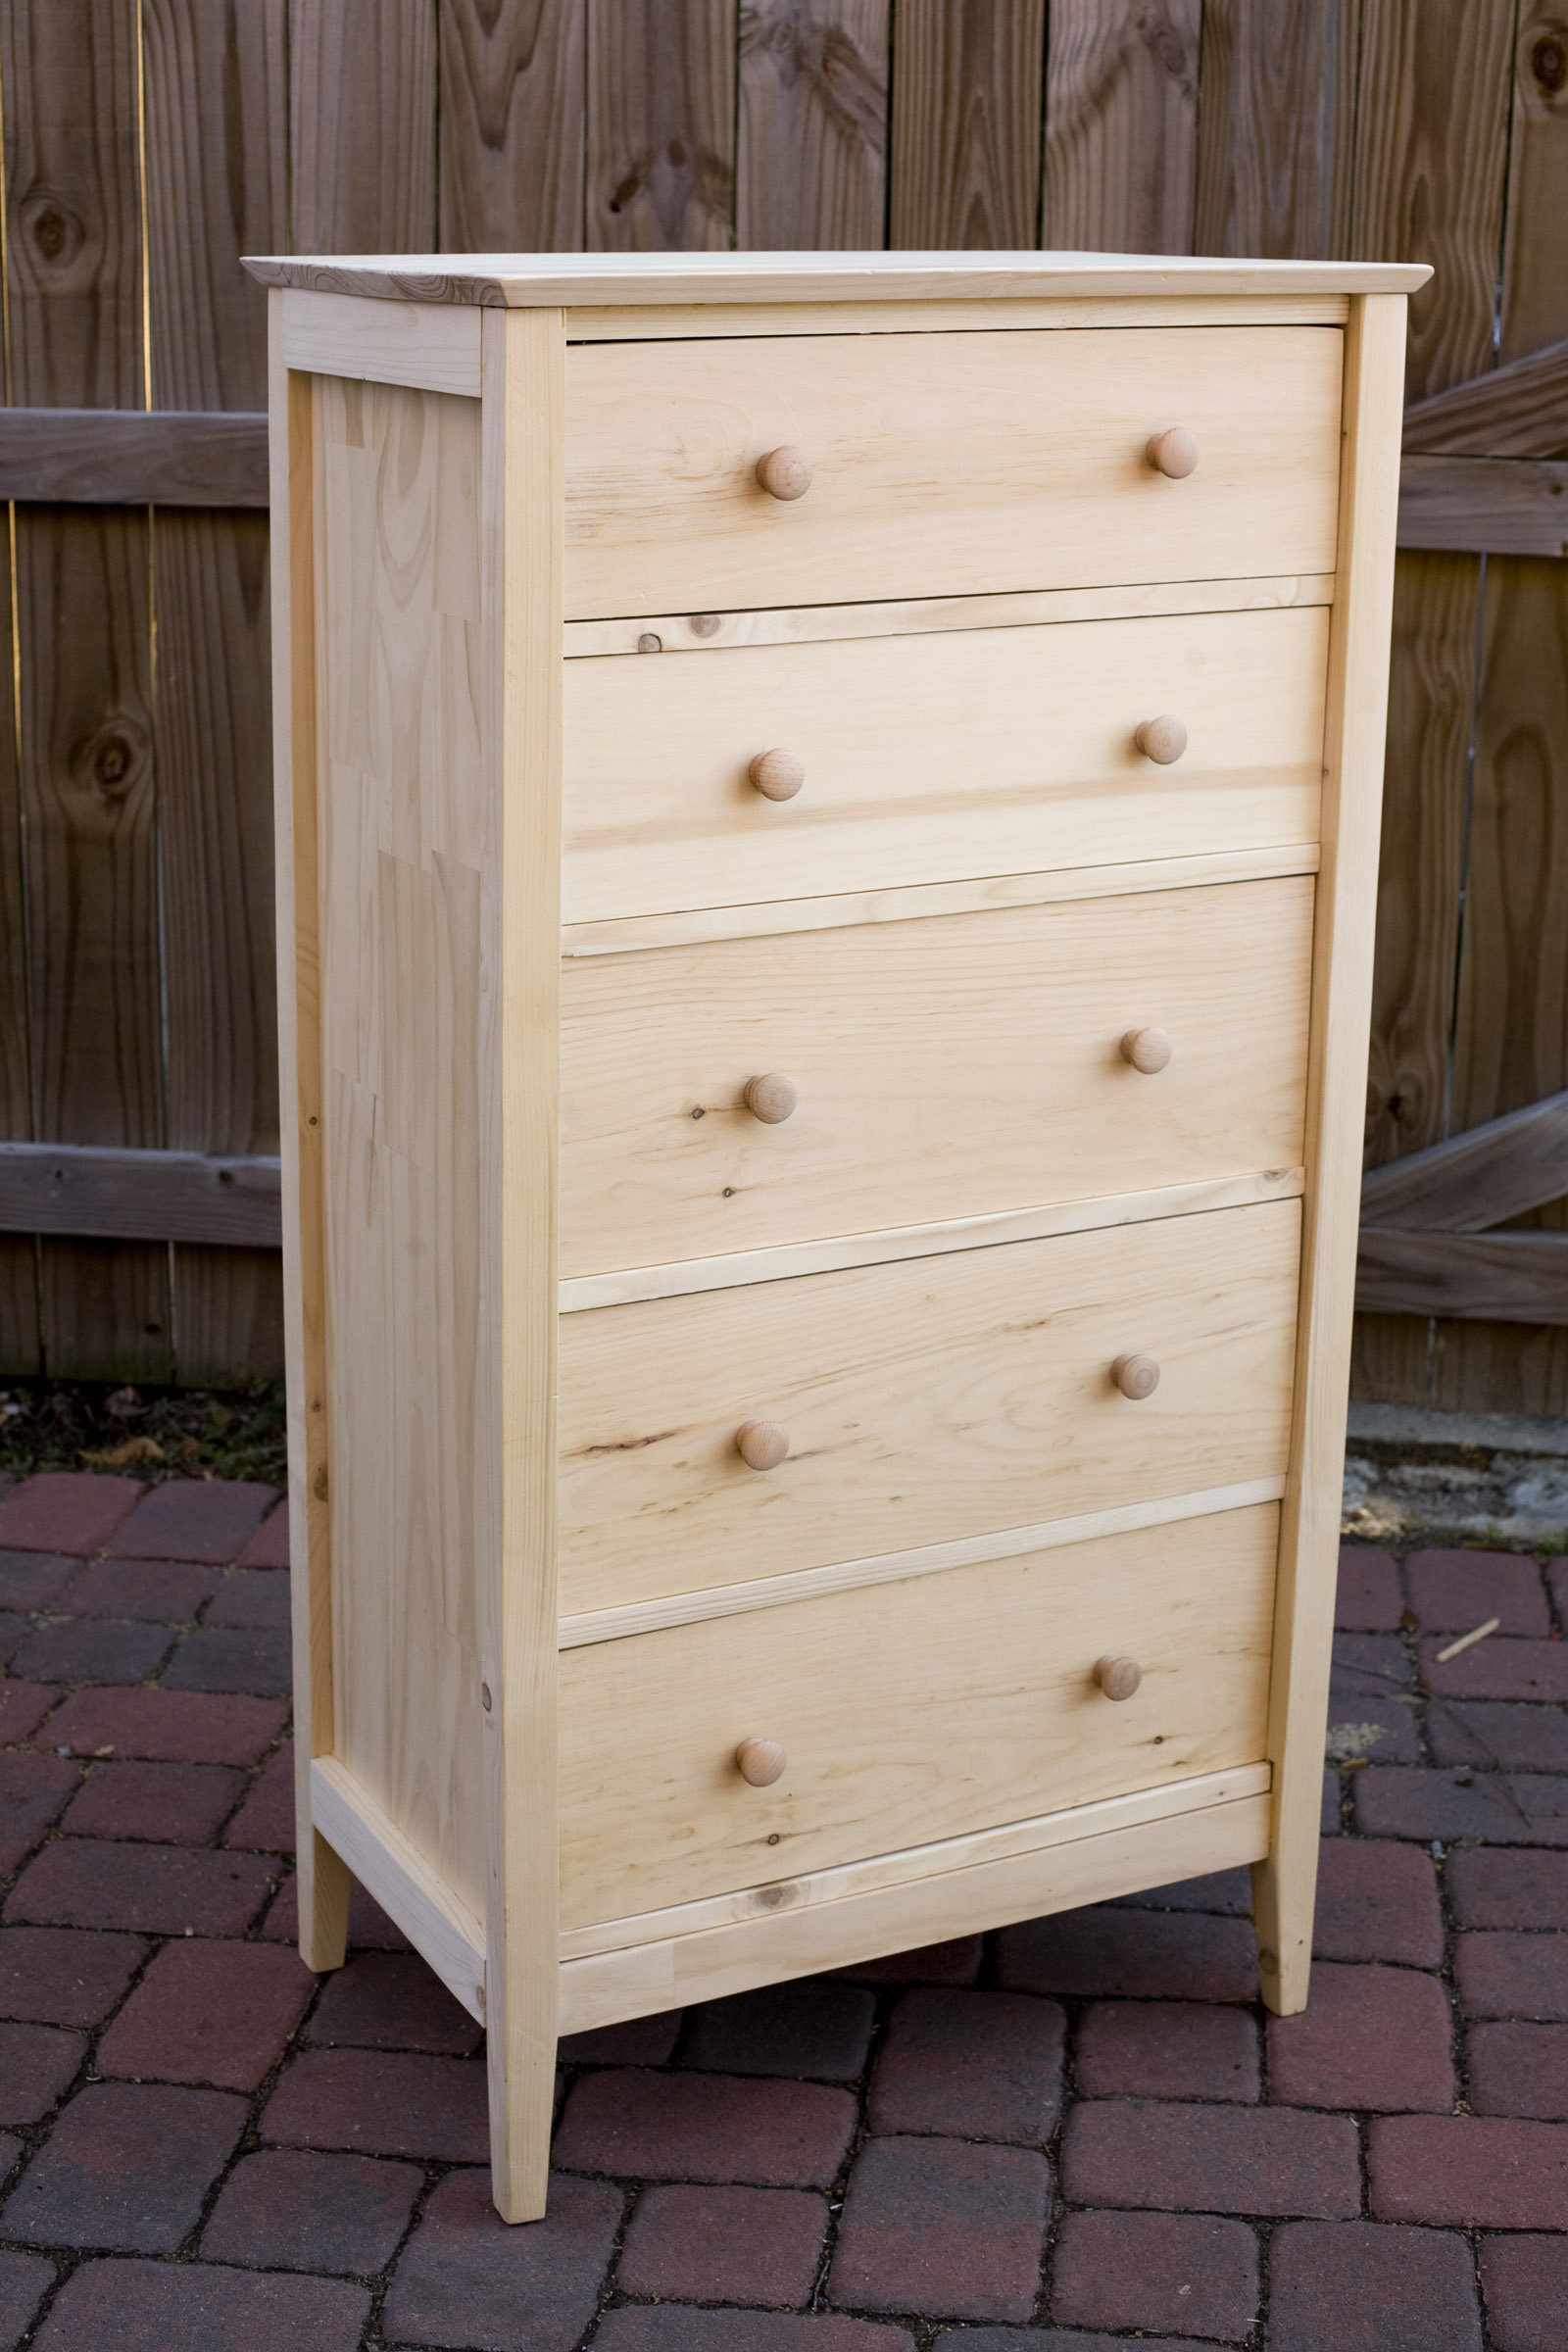 Build Simple Pine Dresser Plans Diy Pdf Yutzy Woodworking